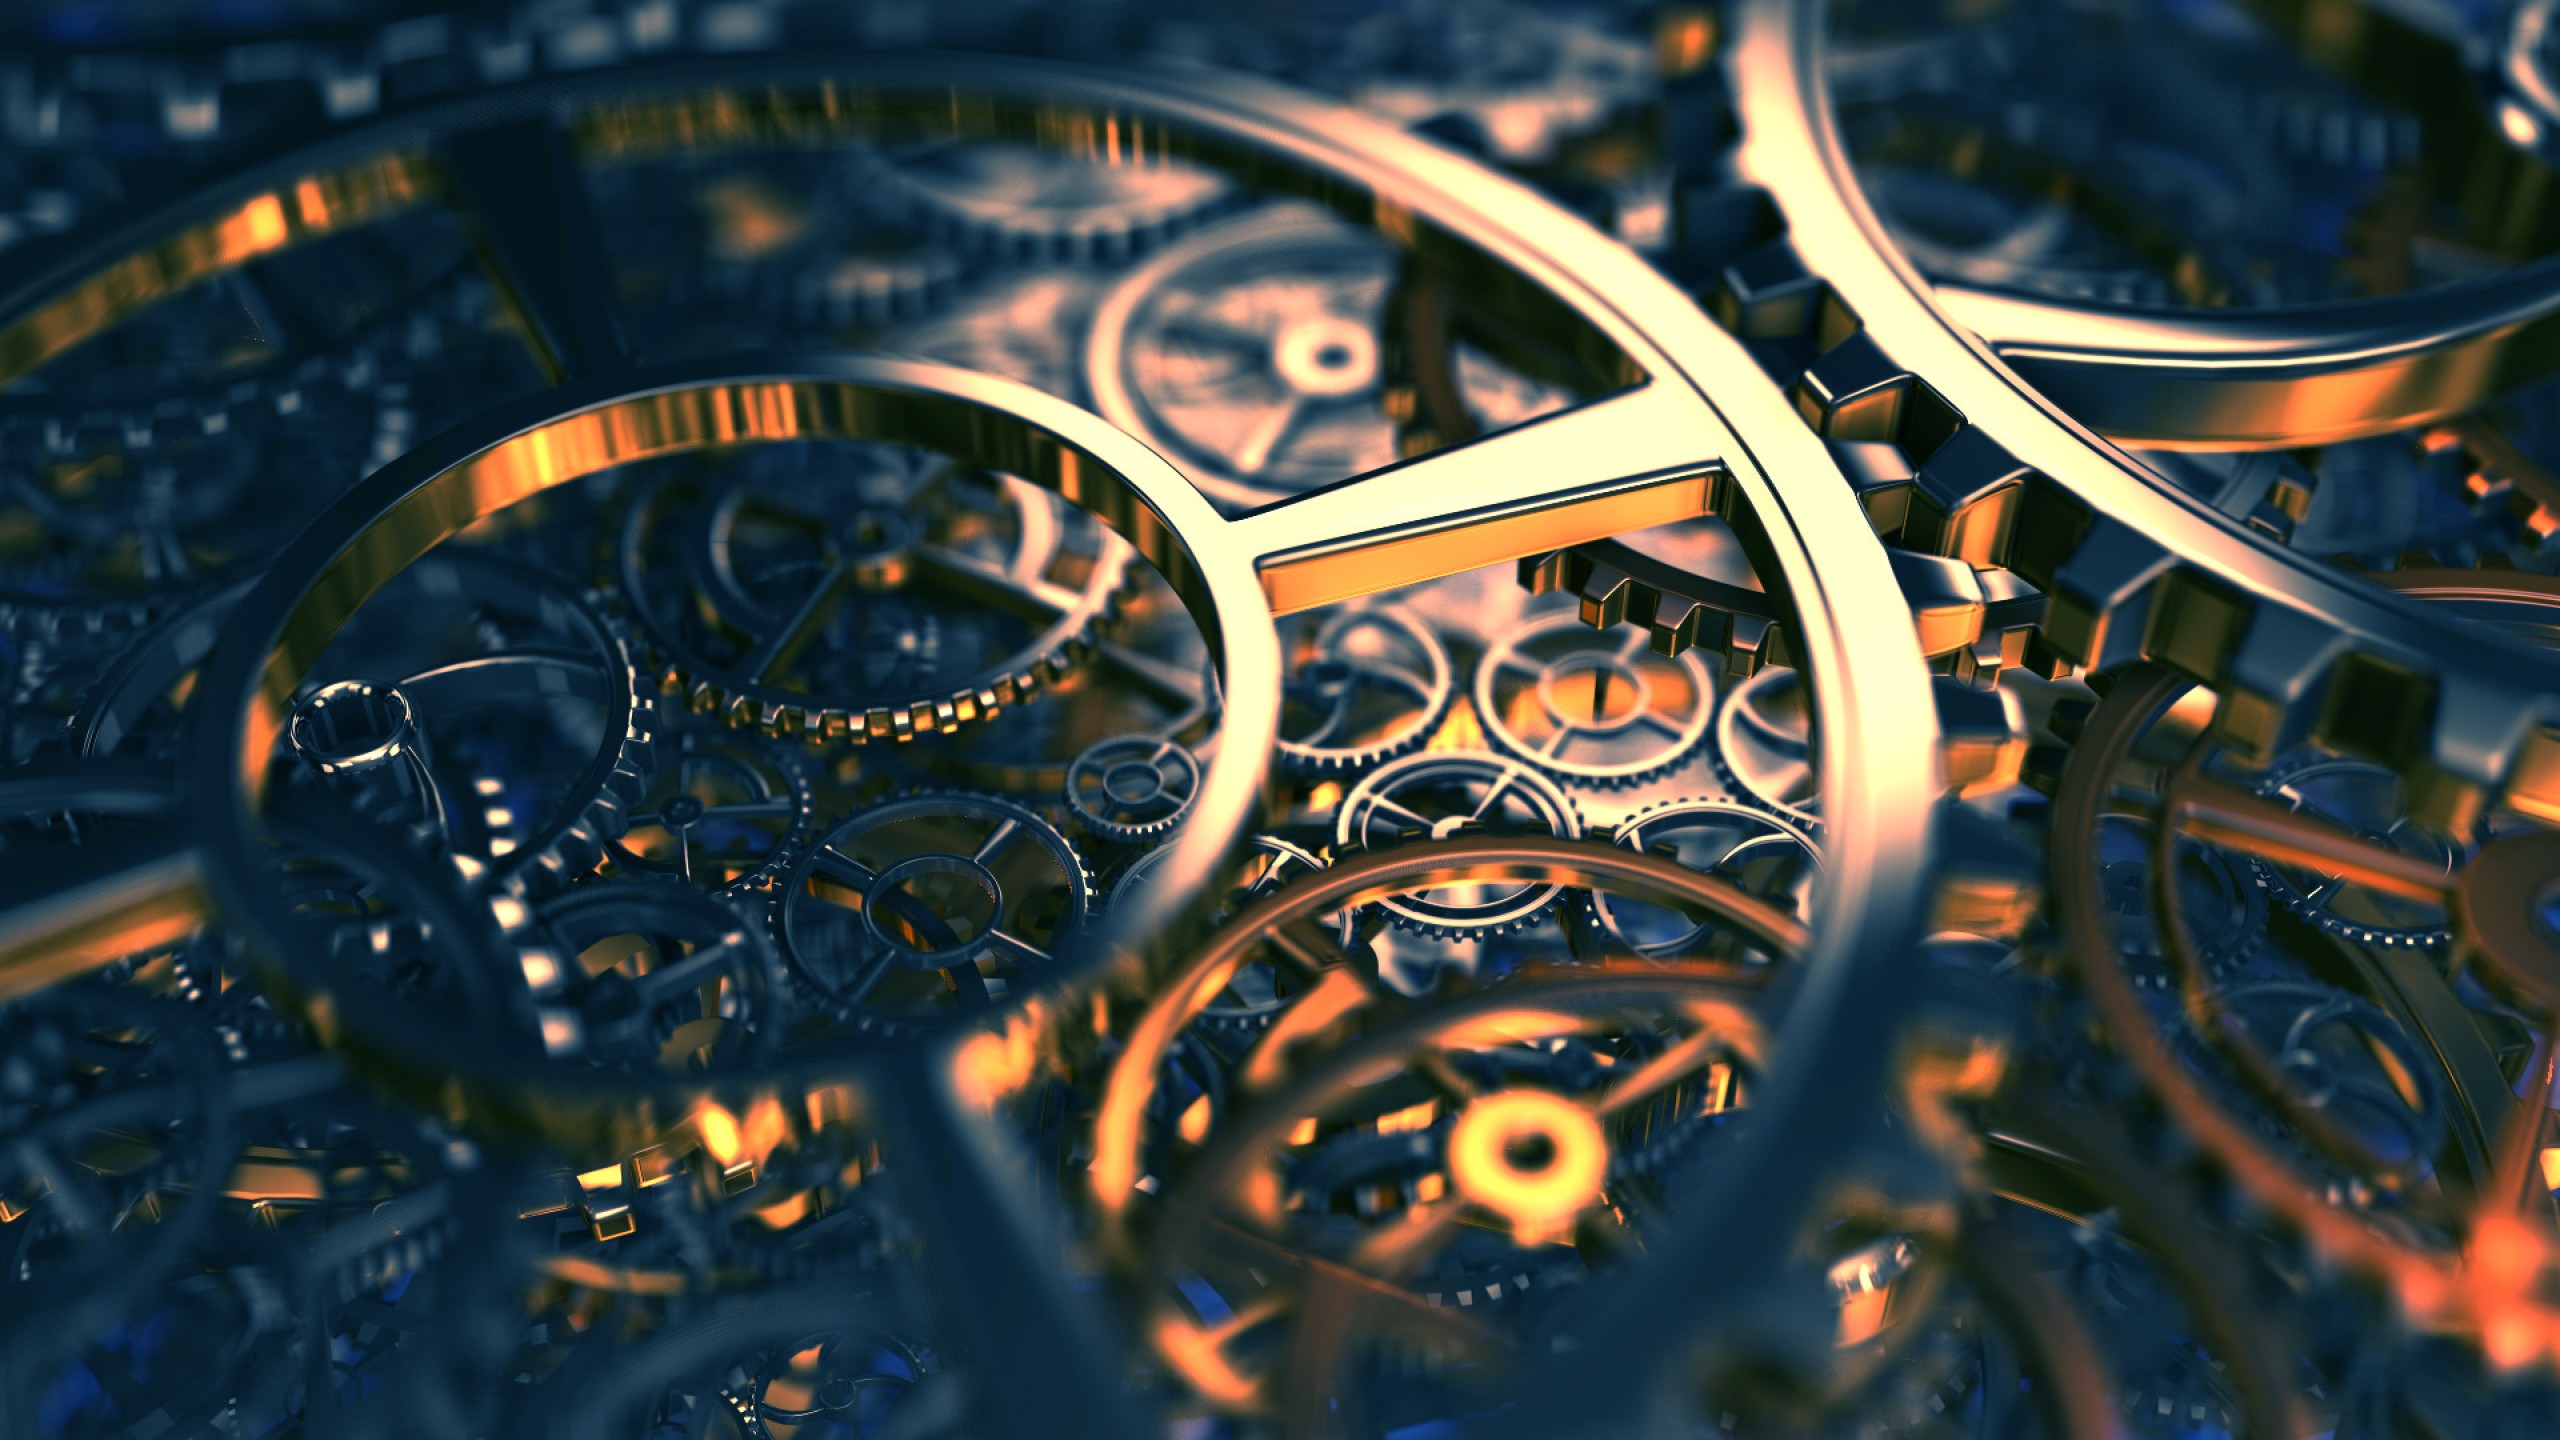 General 2560x1440 gears mechanics clockwork digital art